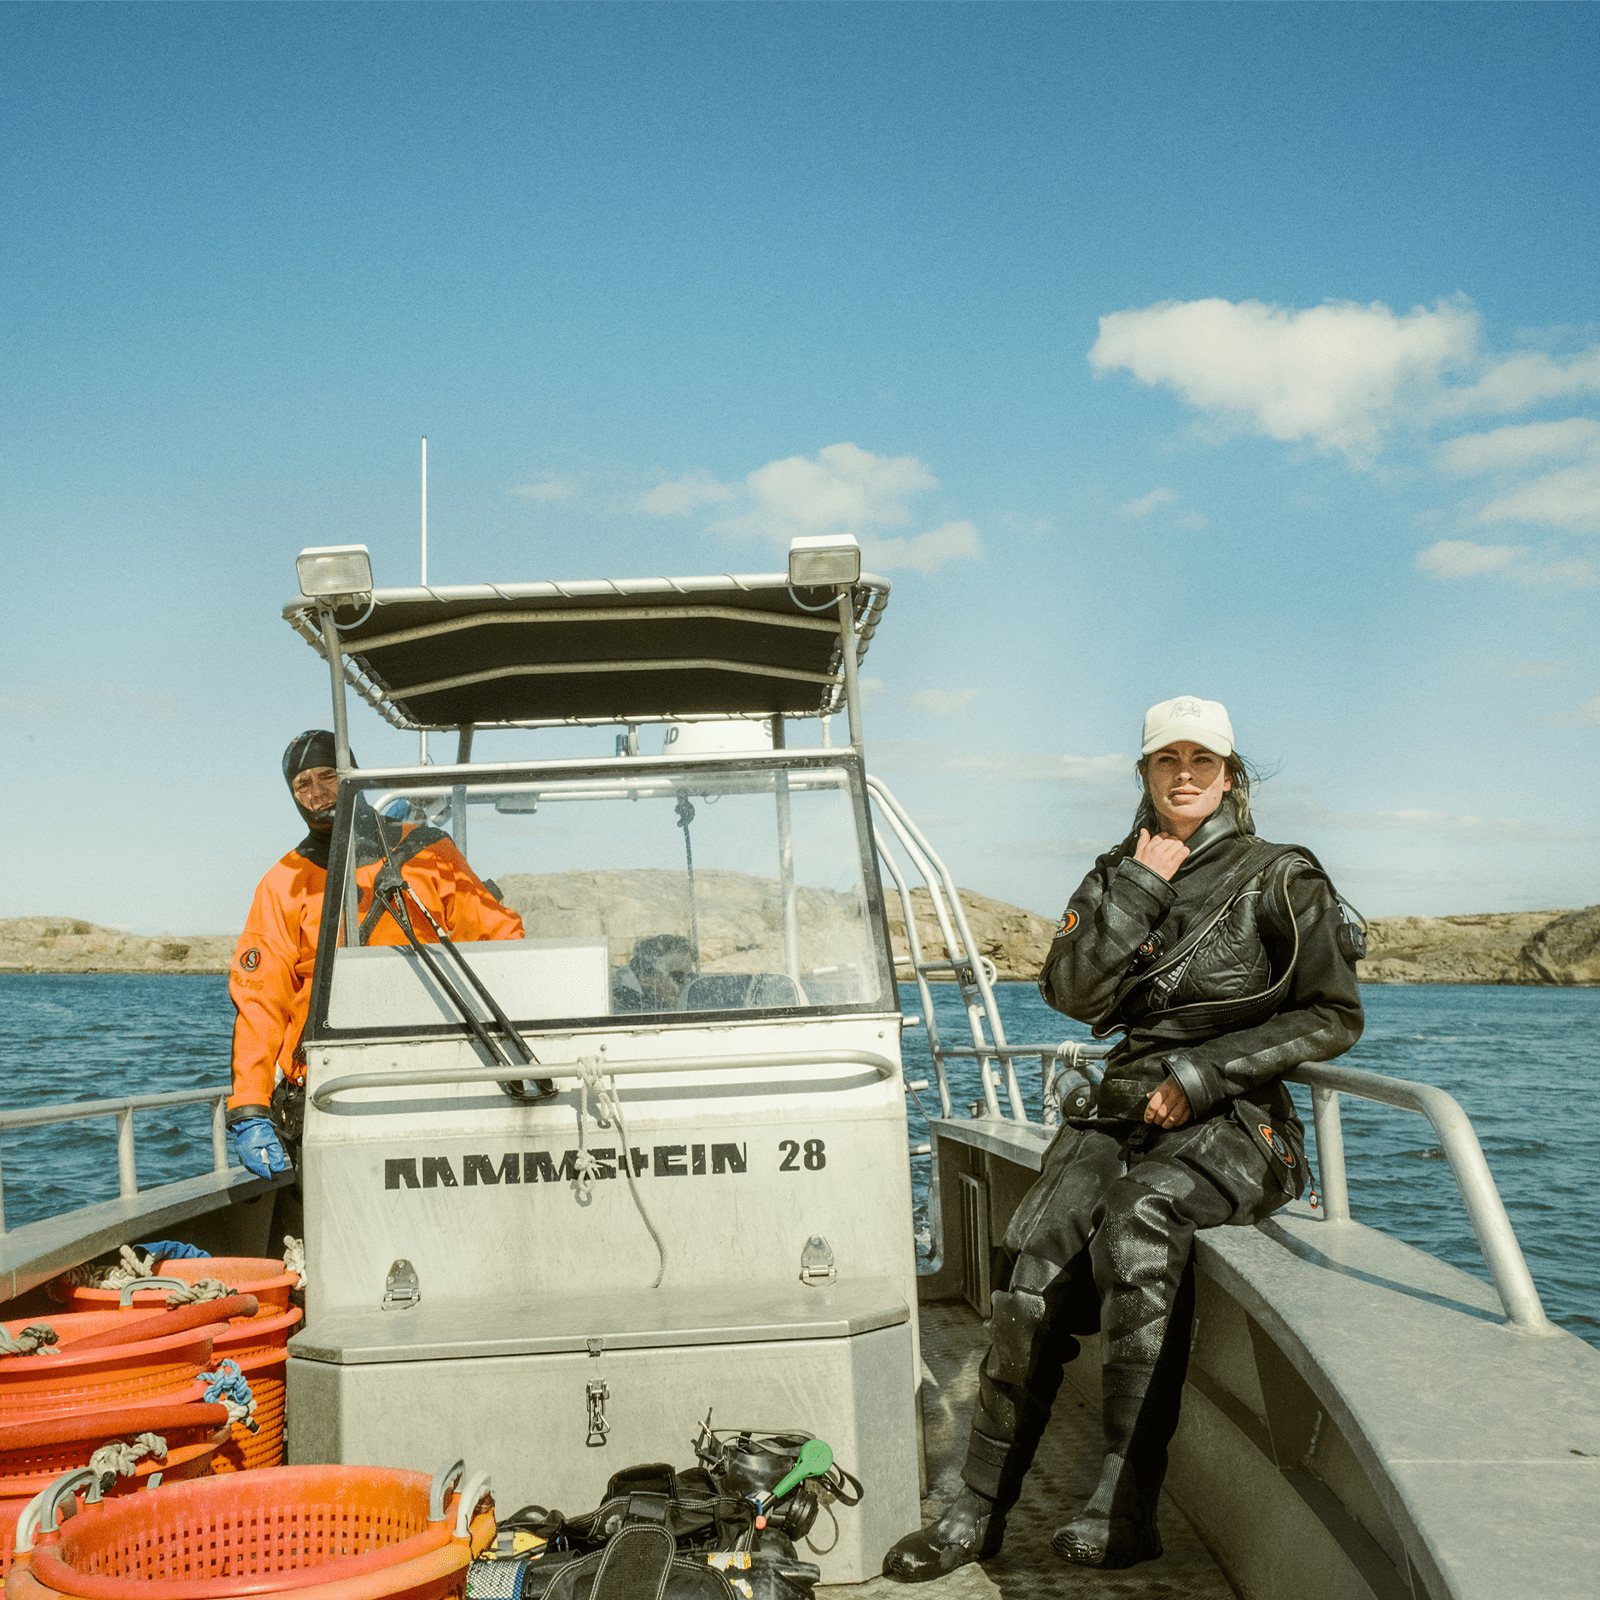 Lotta Klemming: Sweden's female oyster diver 